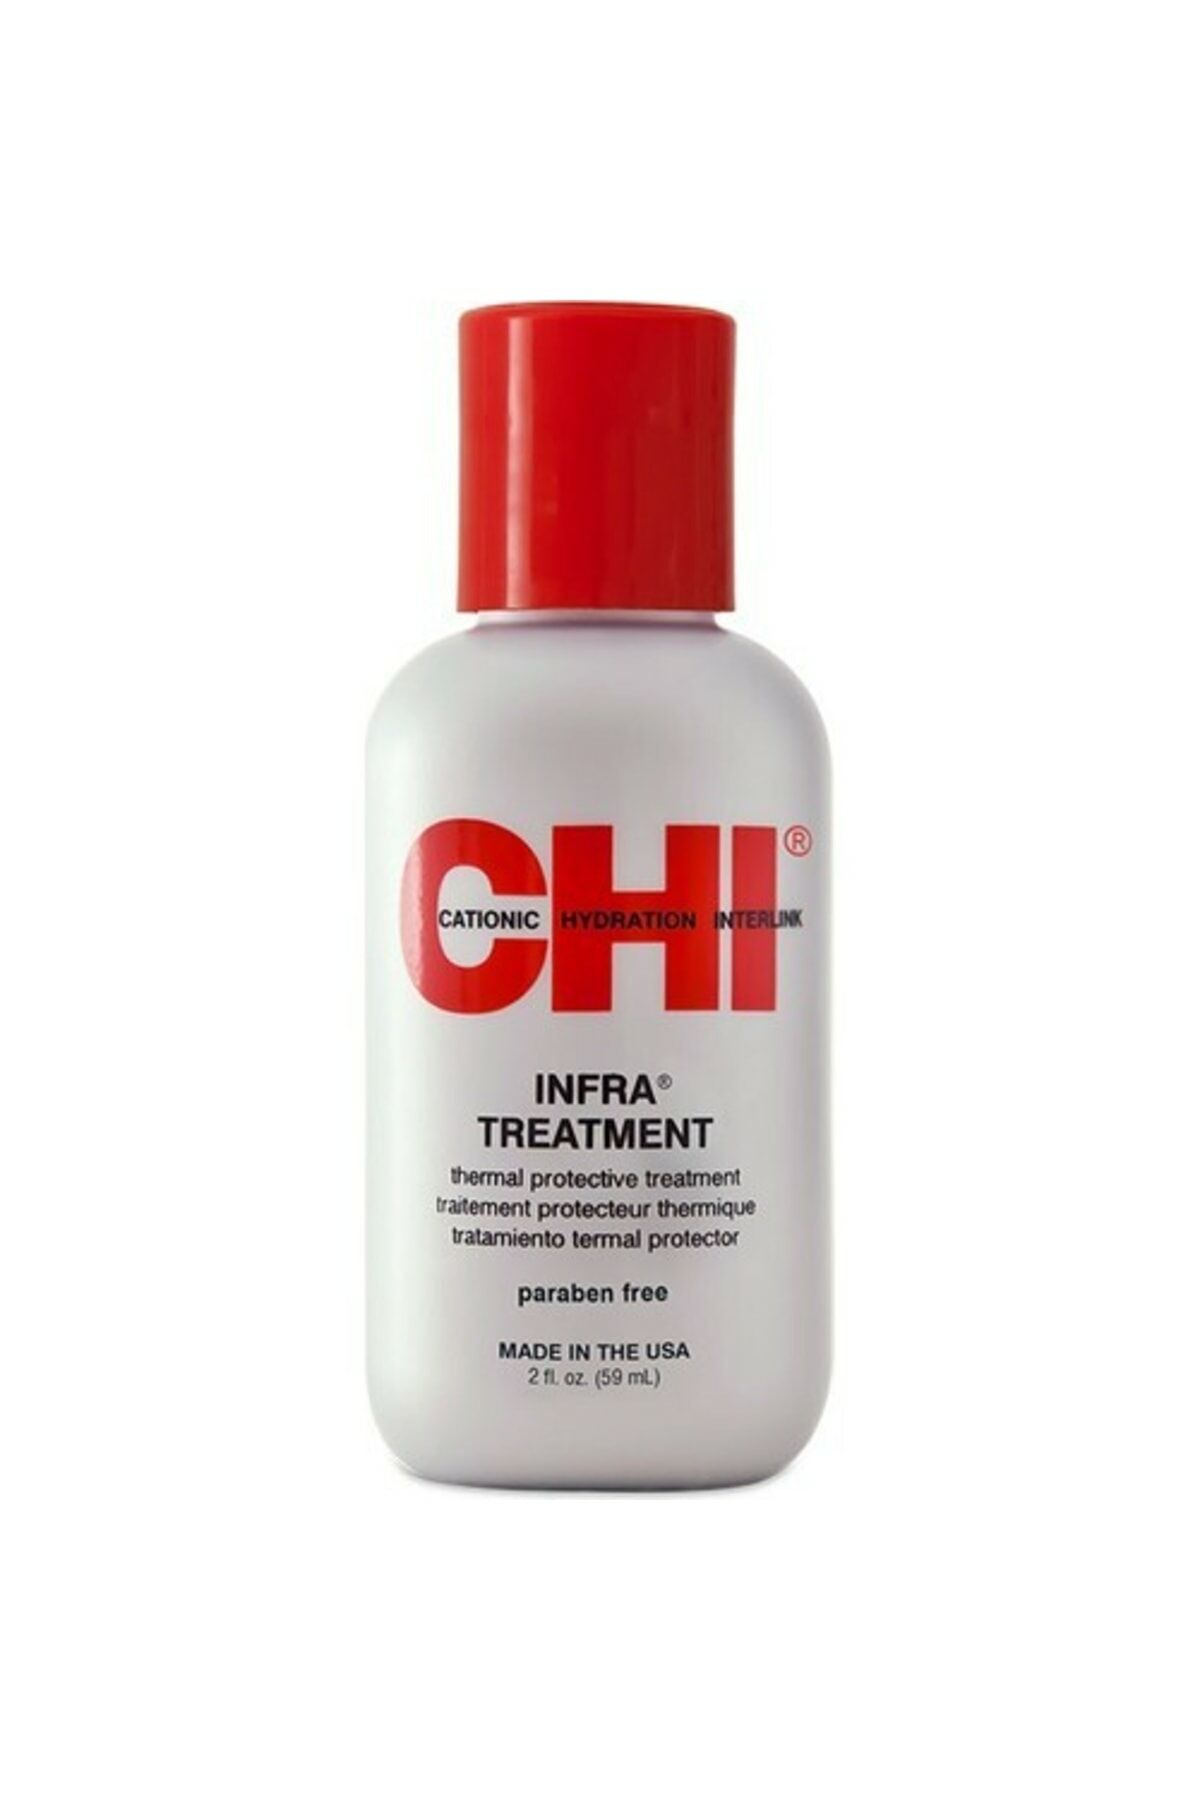 CHI INFRA TREATMENT(İpek İçerikli Saç Bakım Kremi) 59ml